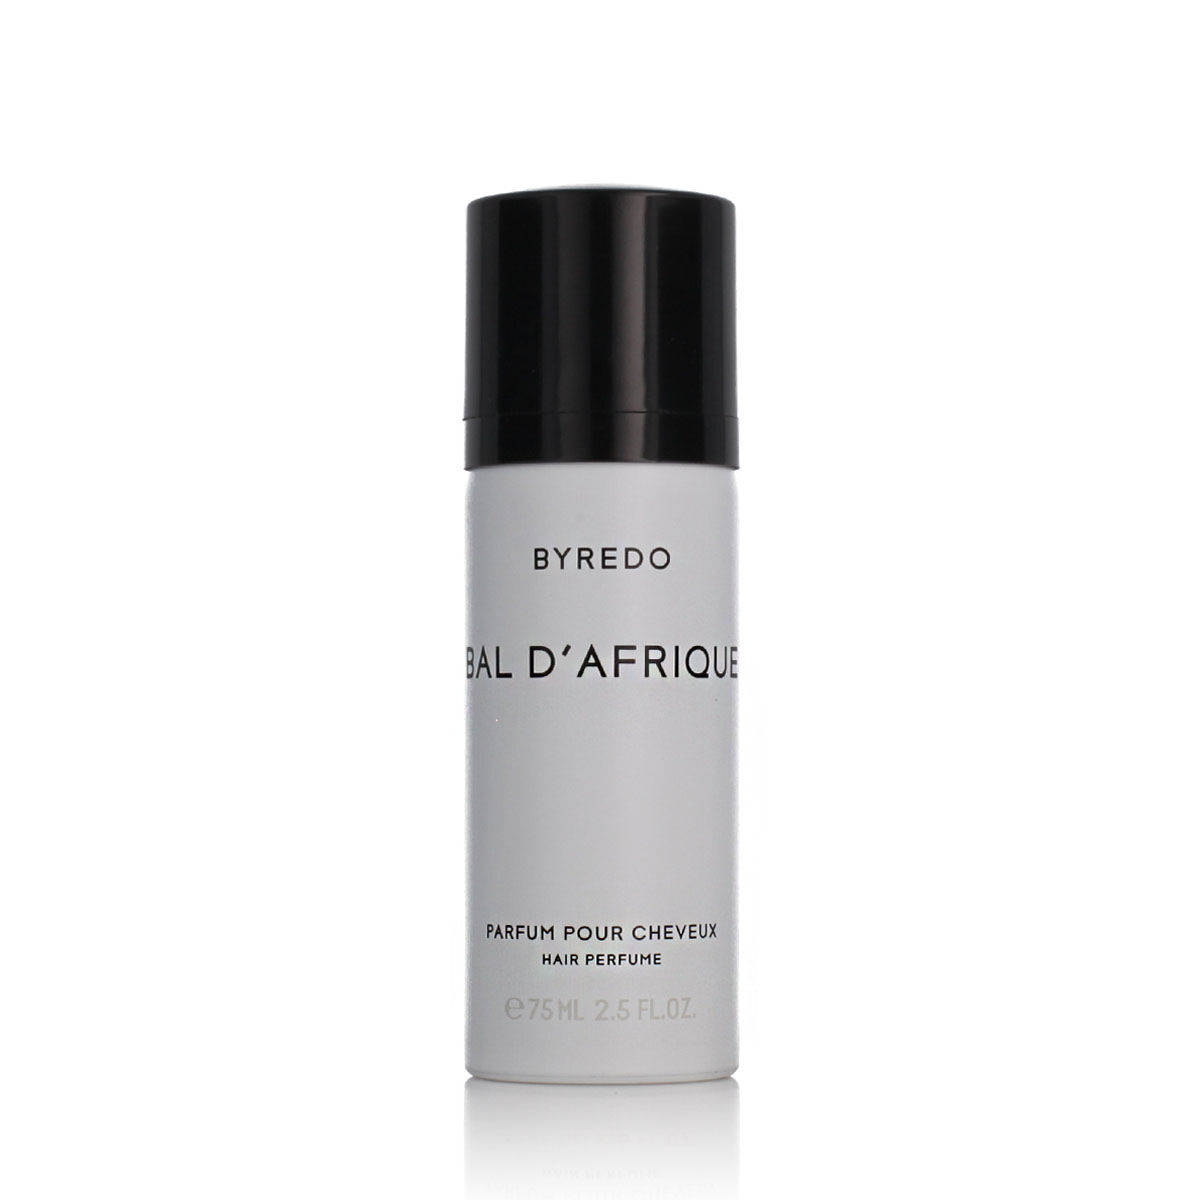 Hair perfume Byredo Bal d'Afrique 75 ml - buy, price, reviews in ...